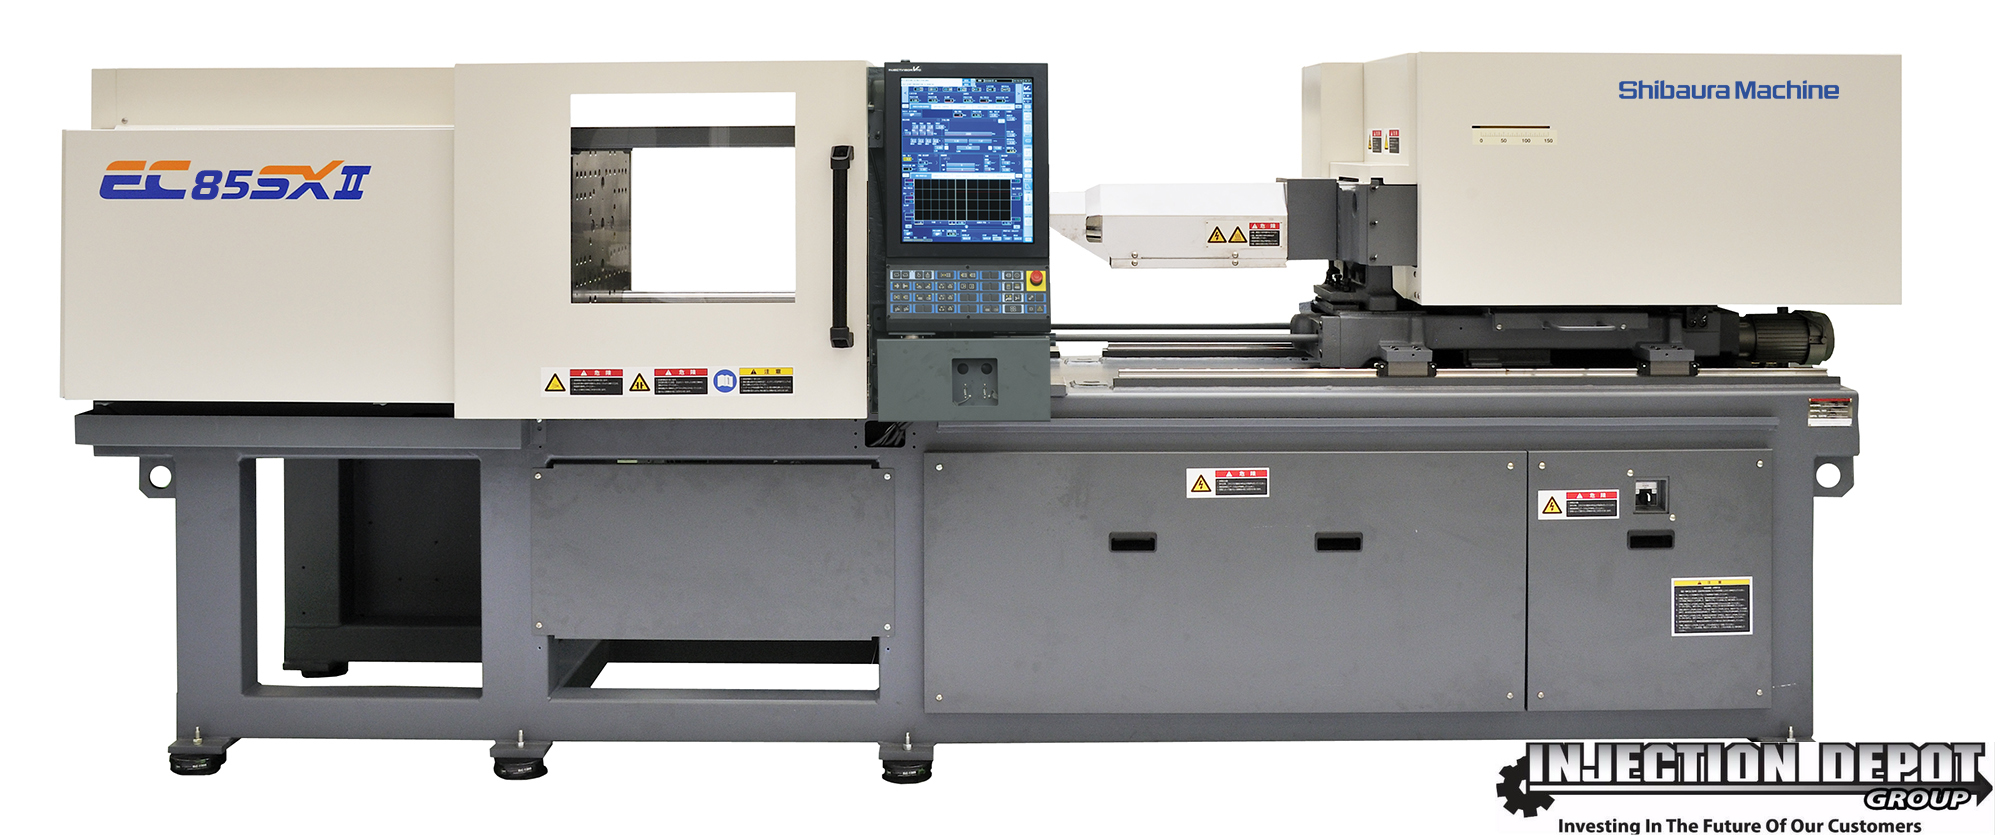 SHIBAURA MACHINE EC85SXIIIV70-U22 1.5Y Horizontal Injection Moulding Machines | INJECTION DEPOT GROUP